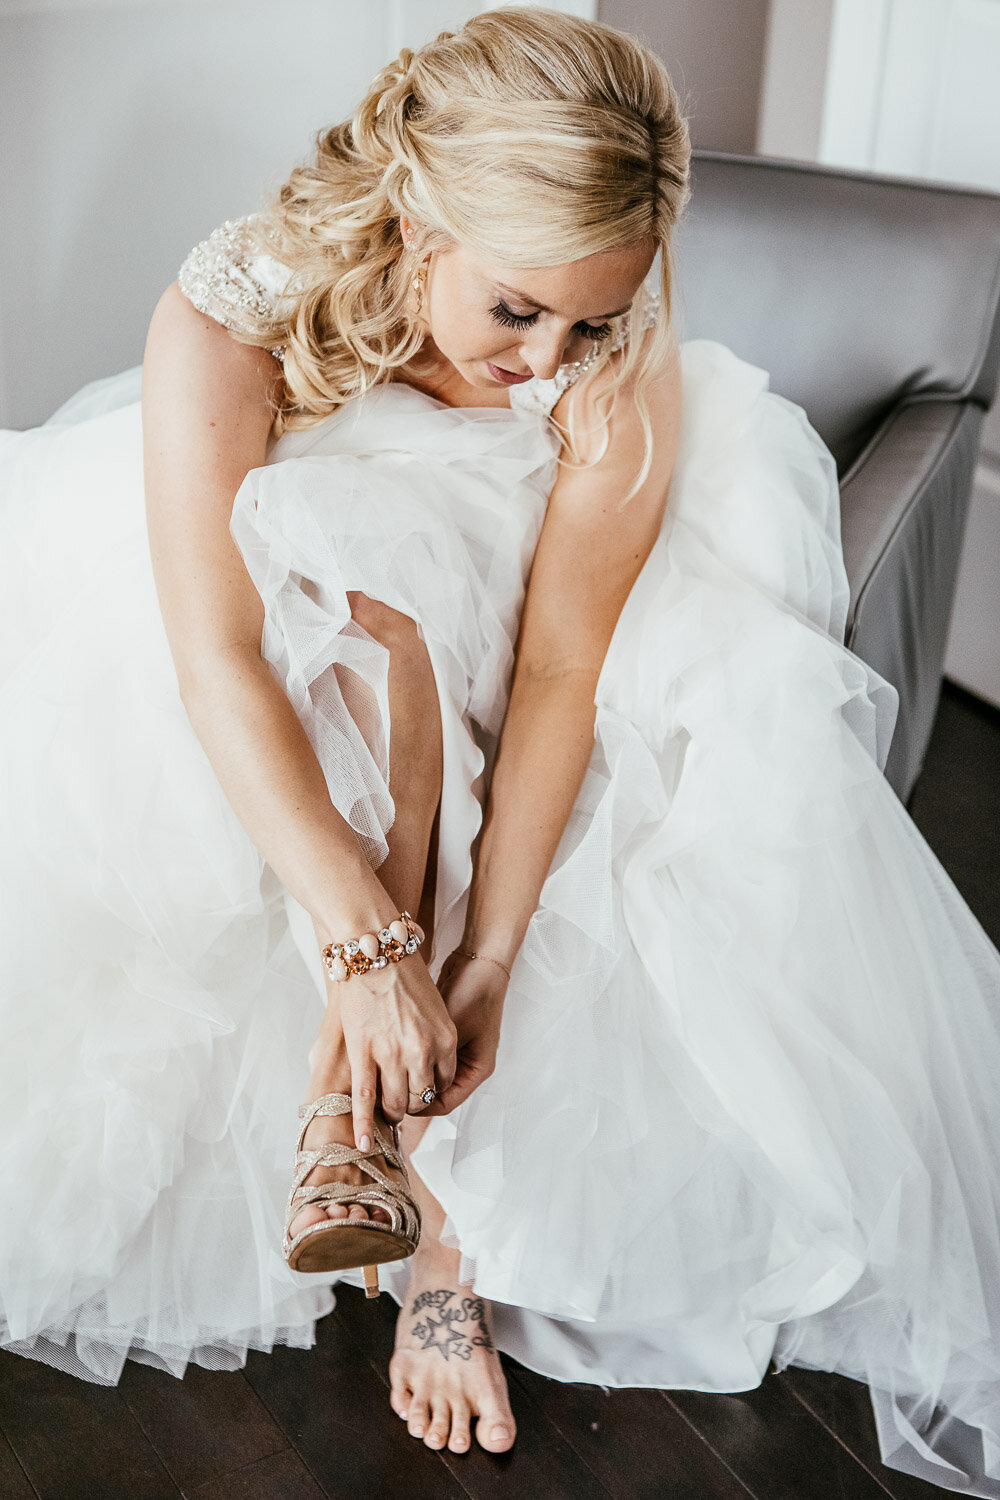 Bride putting on her heels wearing her wedding dress